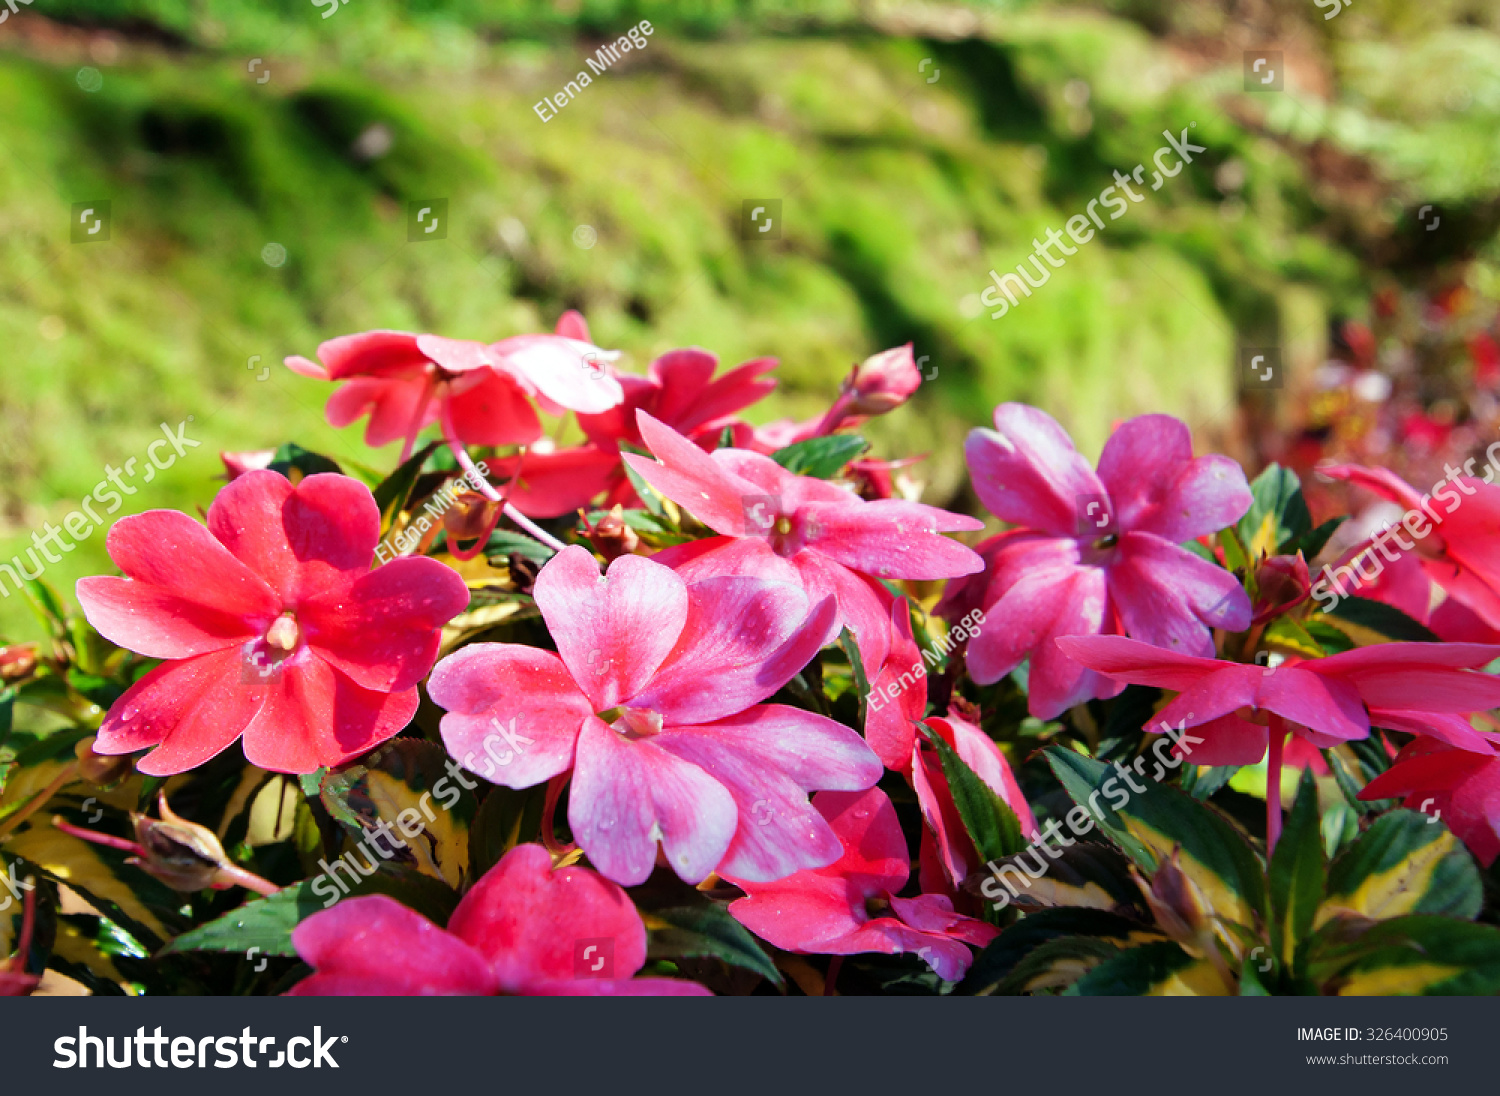 Impatiens Flowers On Flower Bed Garden Stock Photo Edit Now 326400905